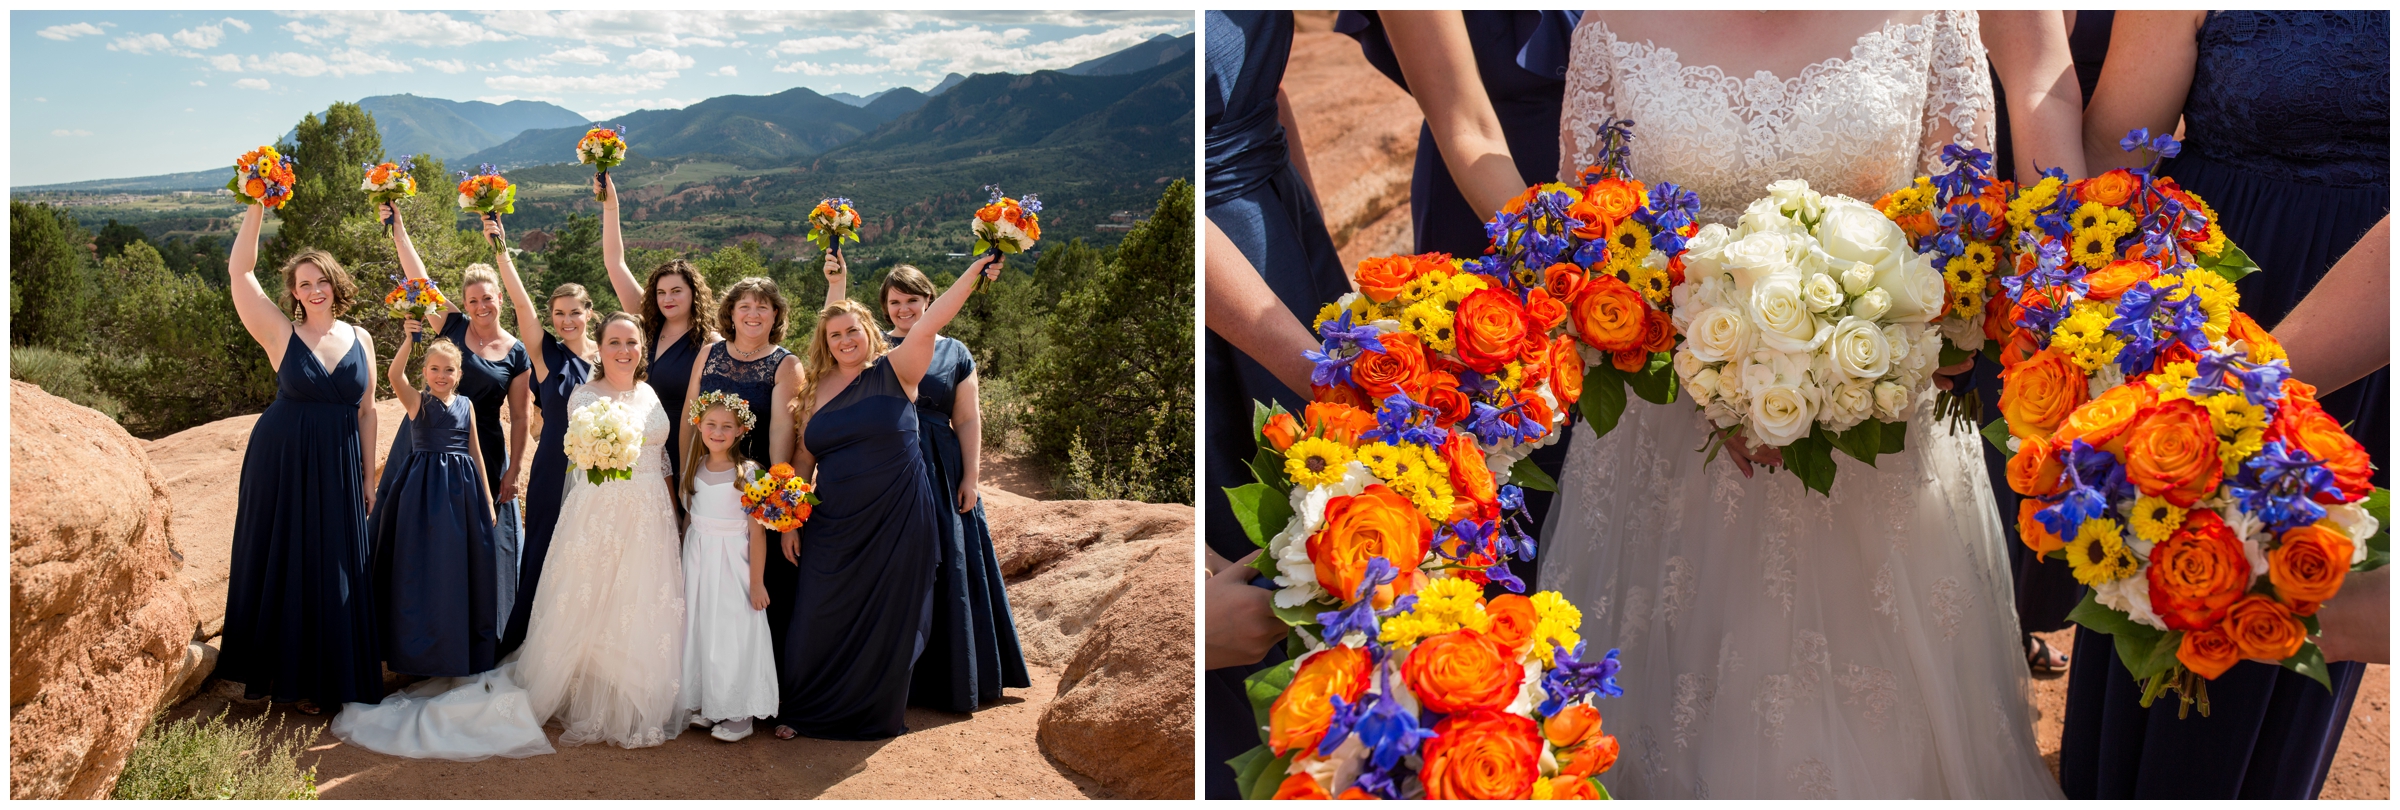 blue and orange wedding inspiration at Garden of the Gods Colorado wedding 